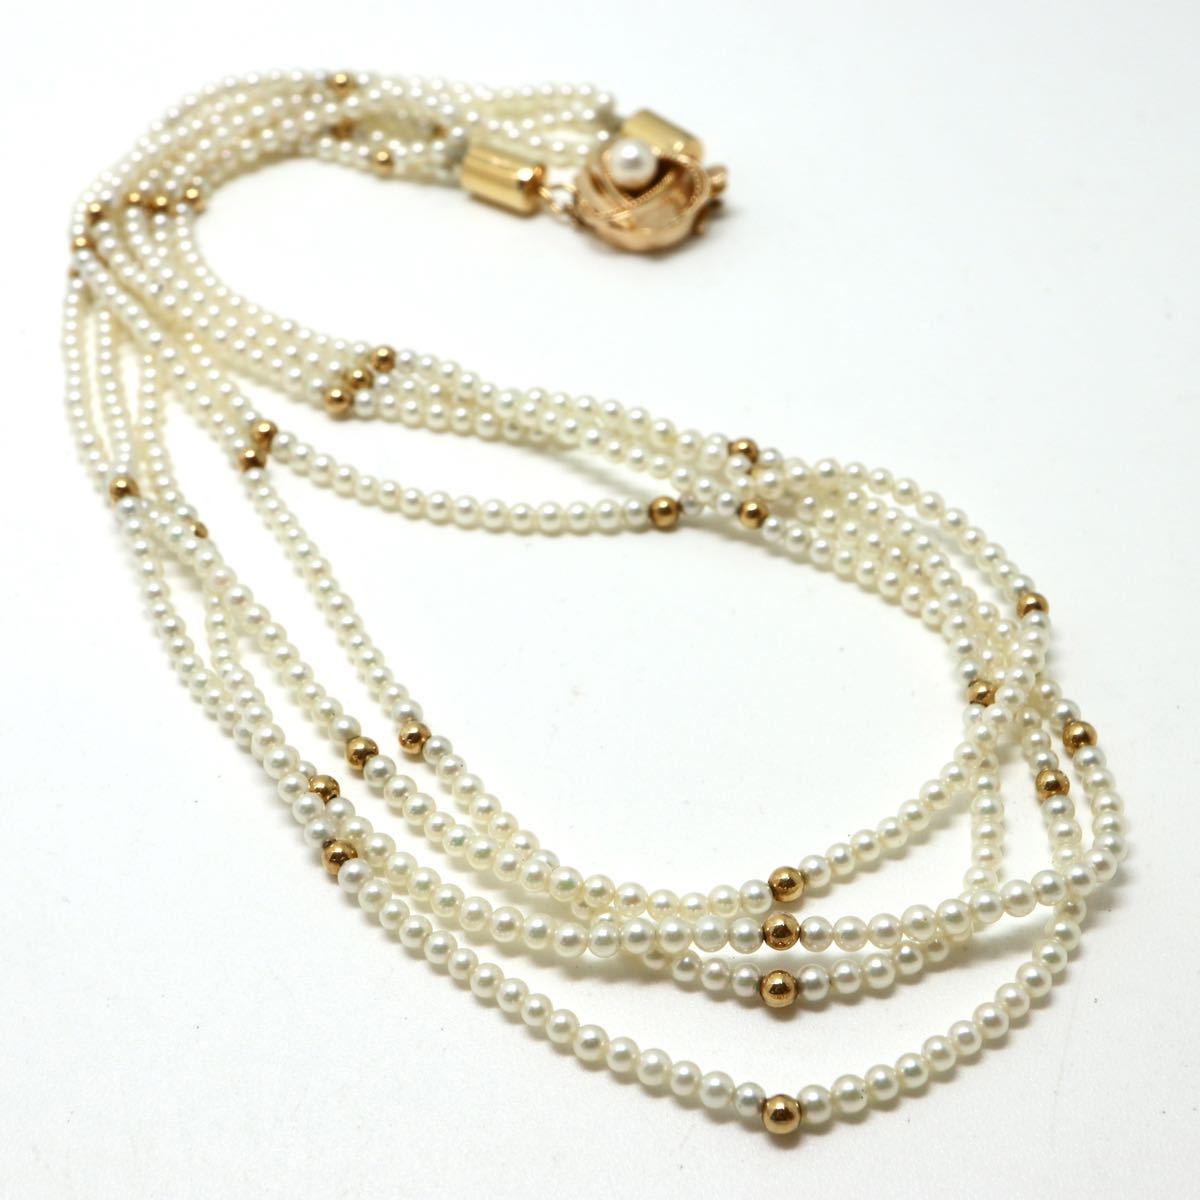 《K14アコヤ本真珠ベビーパール4連ネックレス》J 2.5-3.0mm珠 22.7g 46cm pearl necklace jewelry EC0/EC6_画像5